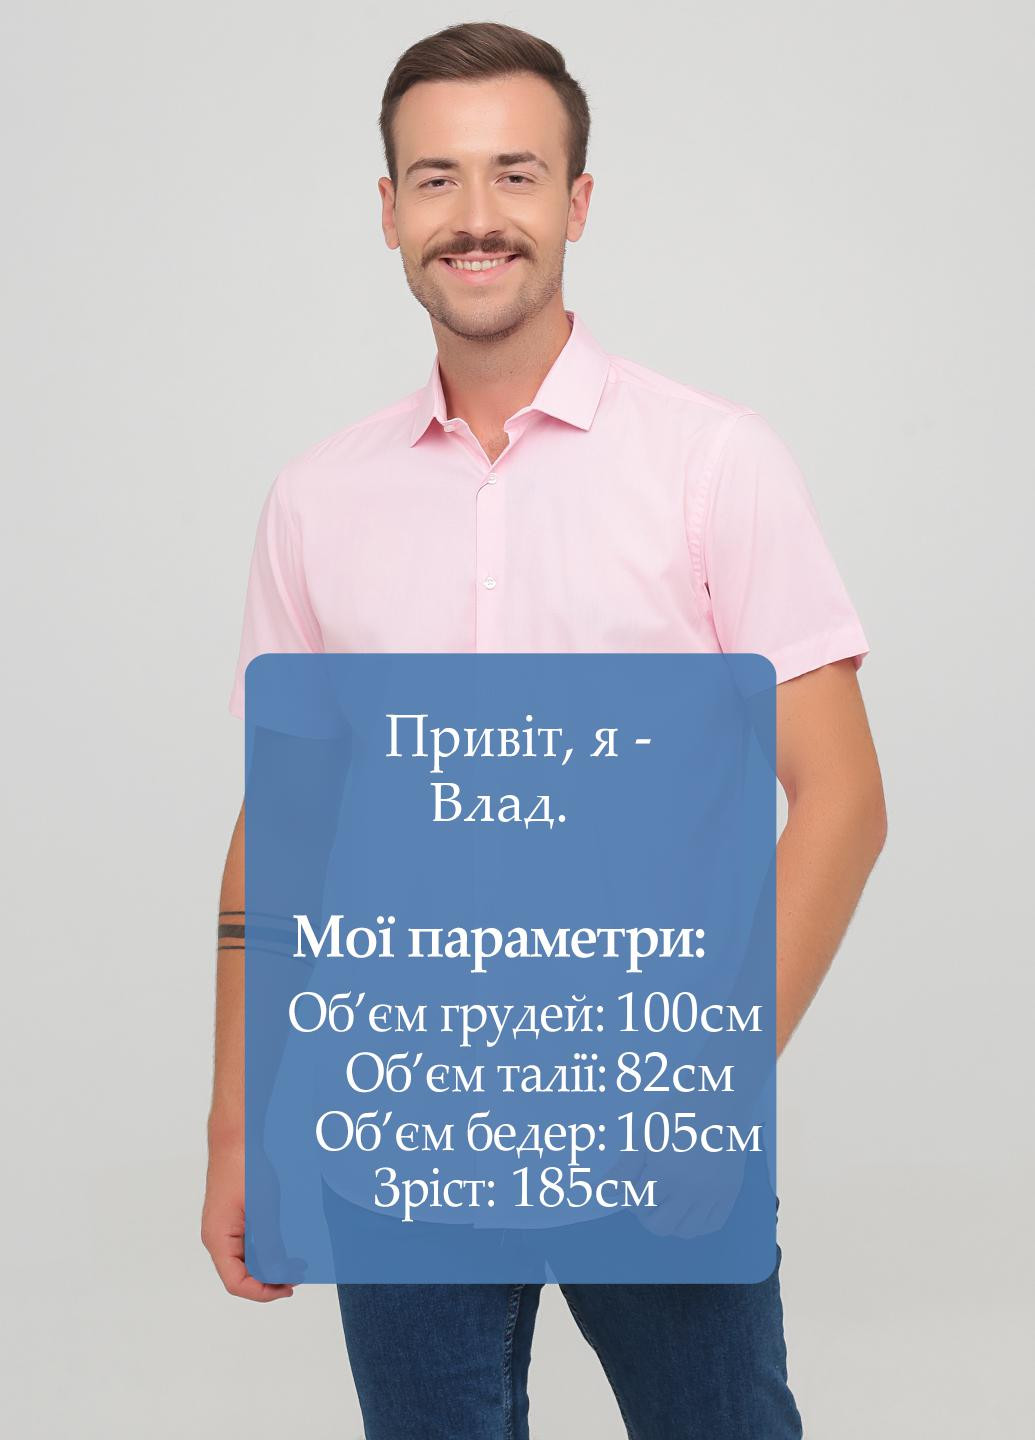 Розовая кэжуал рубашка однотонная Primark